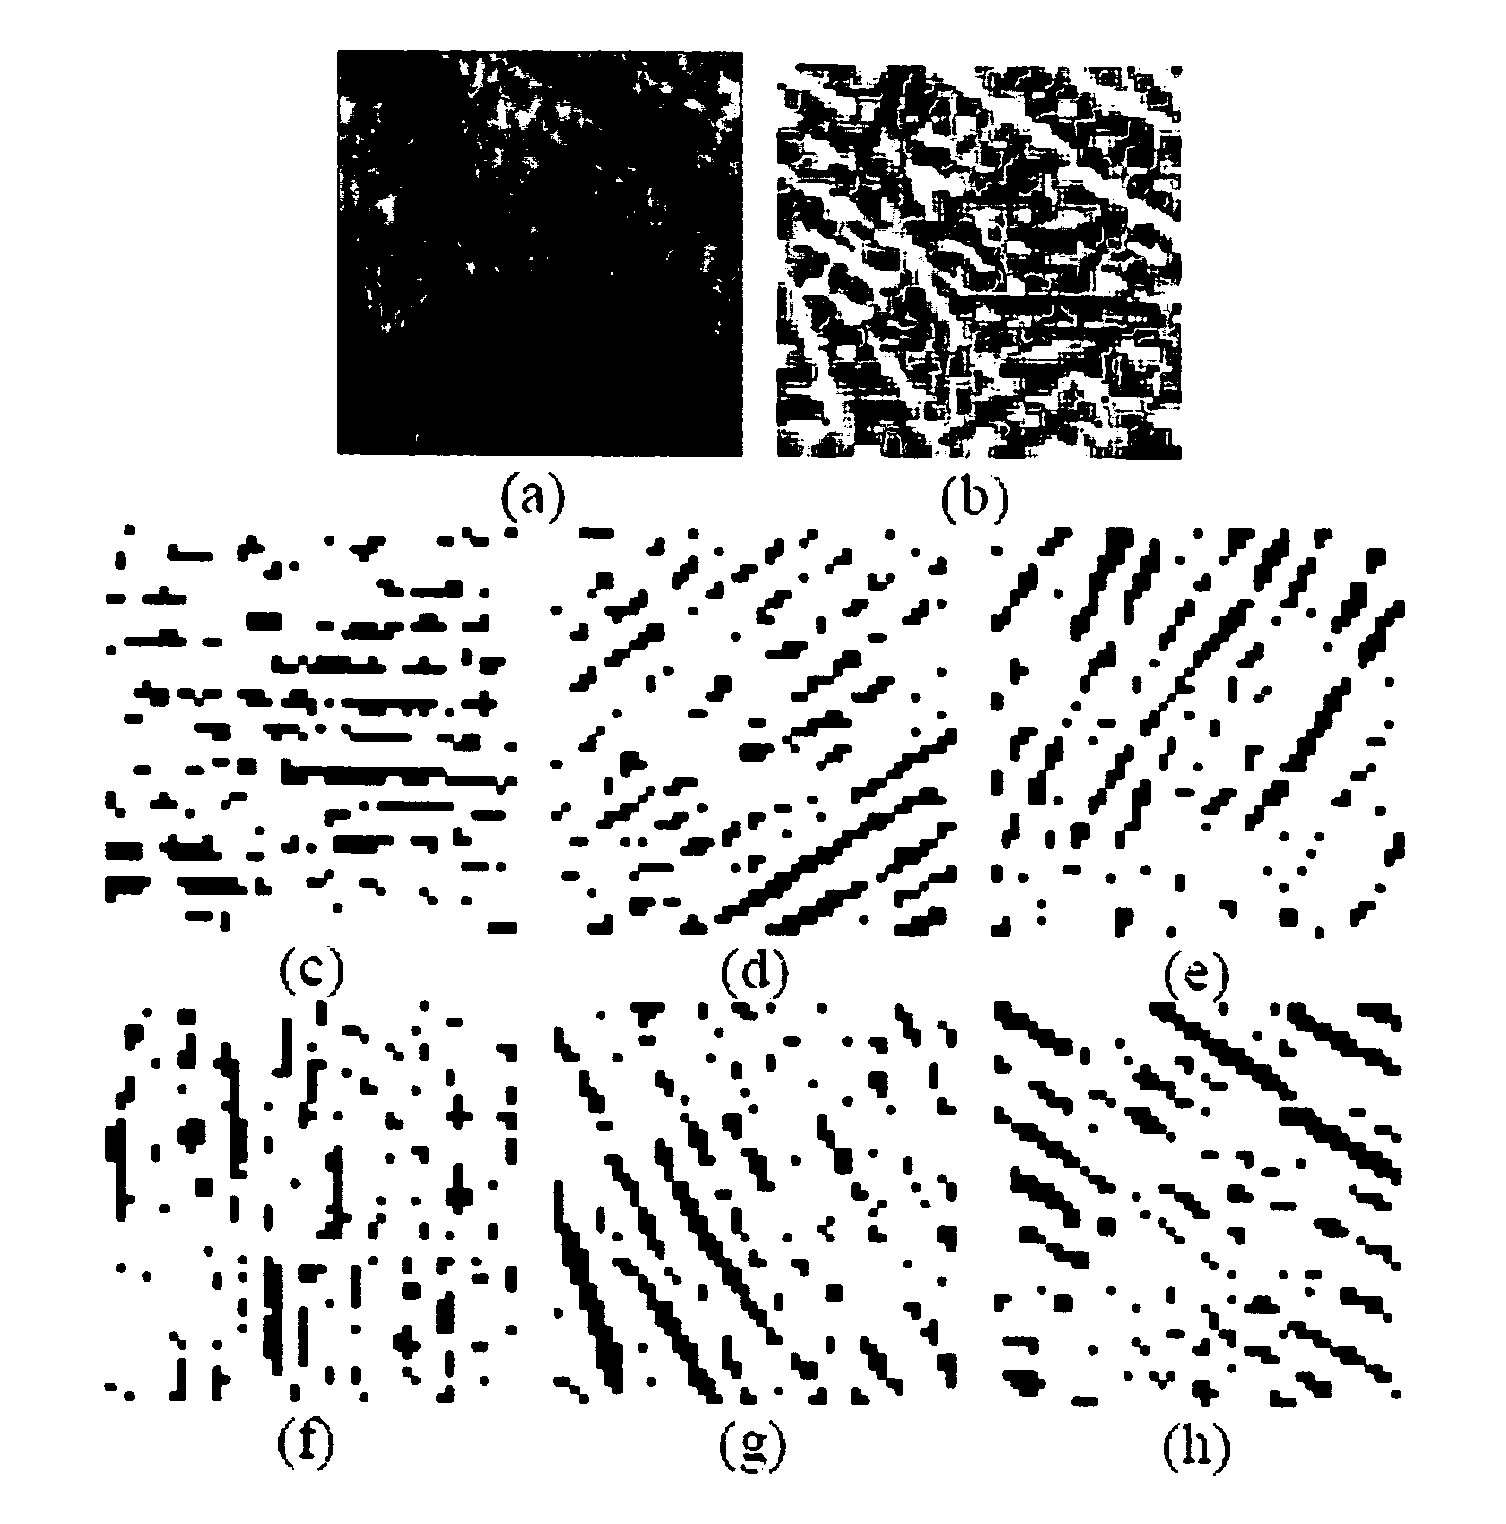 Palm print identification using palm line orientation